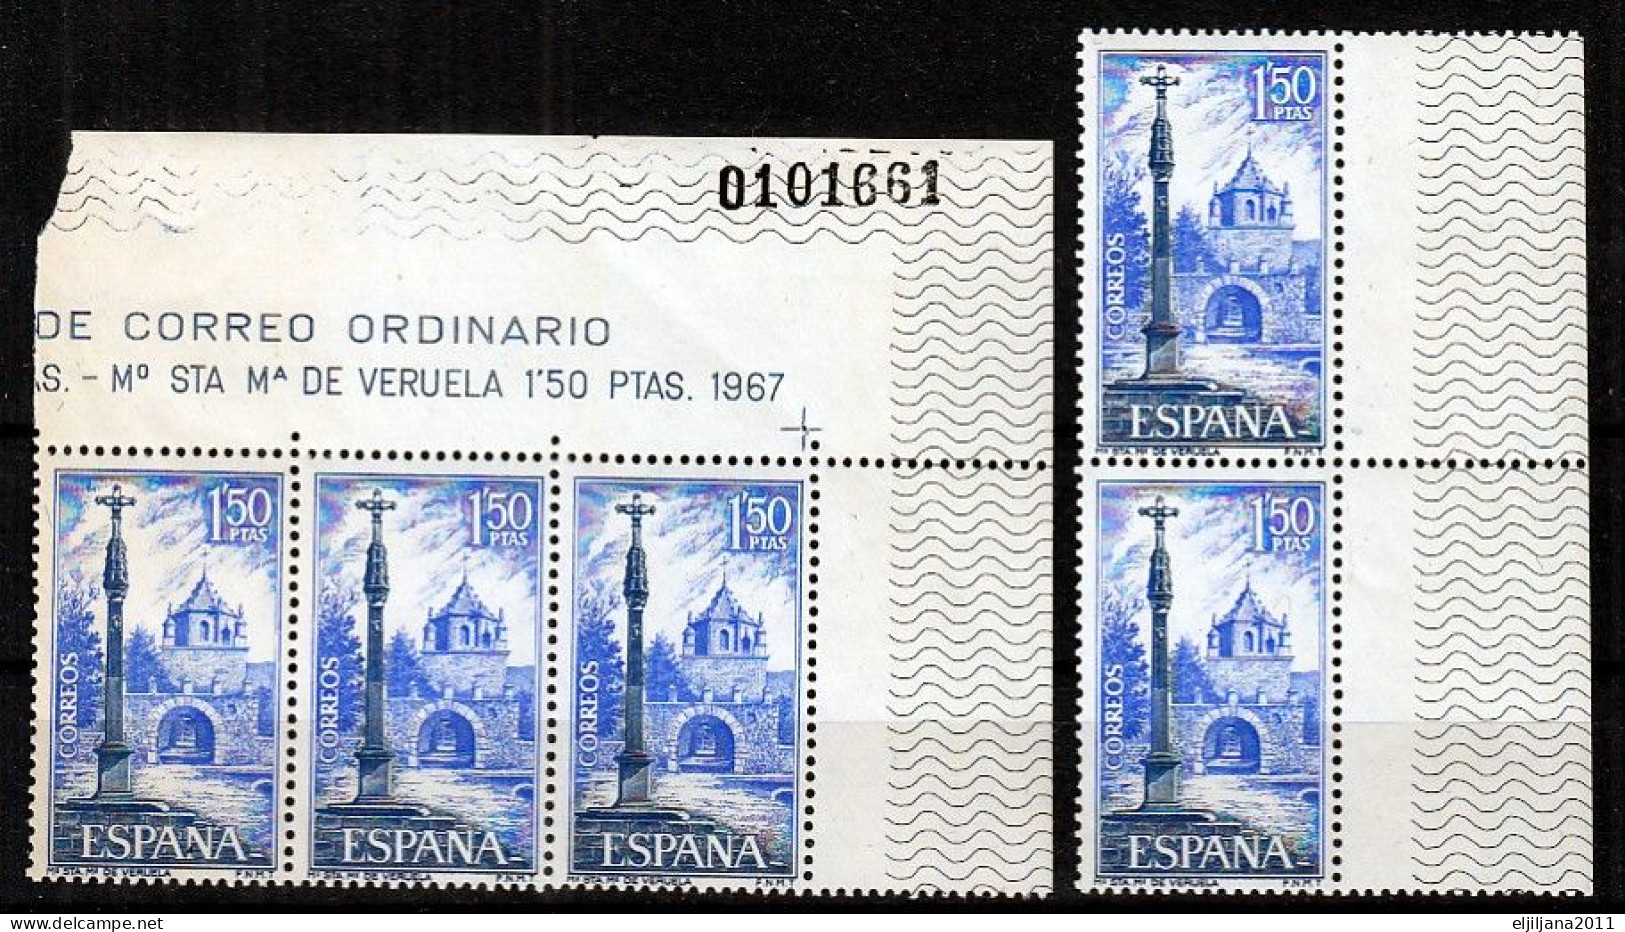 ⁕ SPAIN / ESPANA 1967 ⁕ Monasteries And Abbeys Mi.1728 - 1730 X 5 ⁕ MNH - See Scan - Nuevos